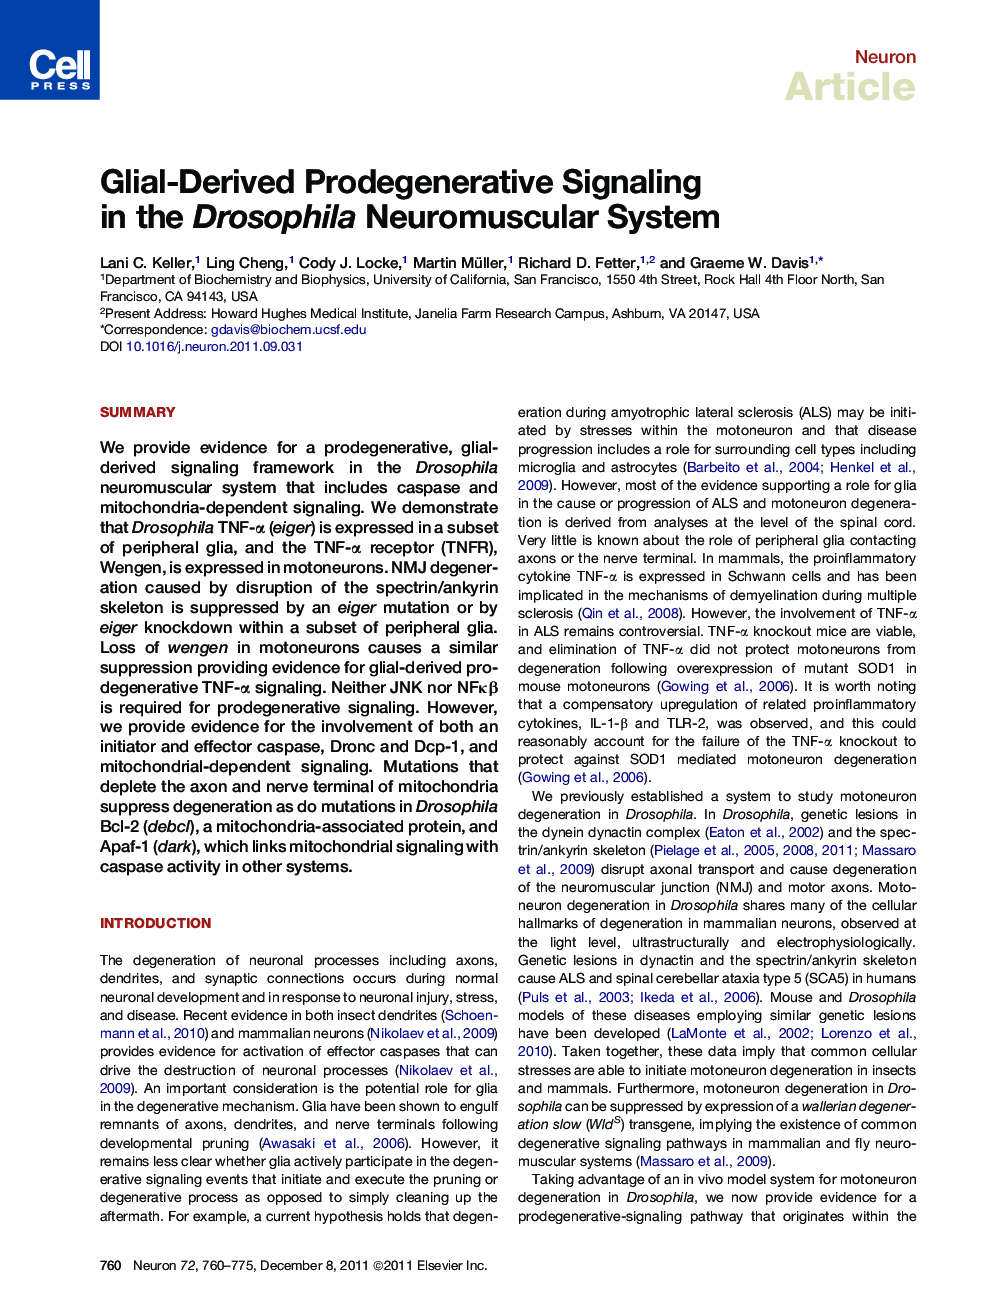 Glial-Derived Prodegenerative Signaling in the Drosophila Neuromuscular System